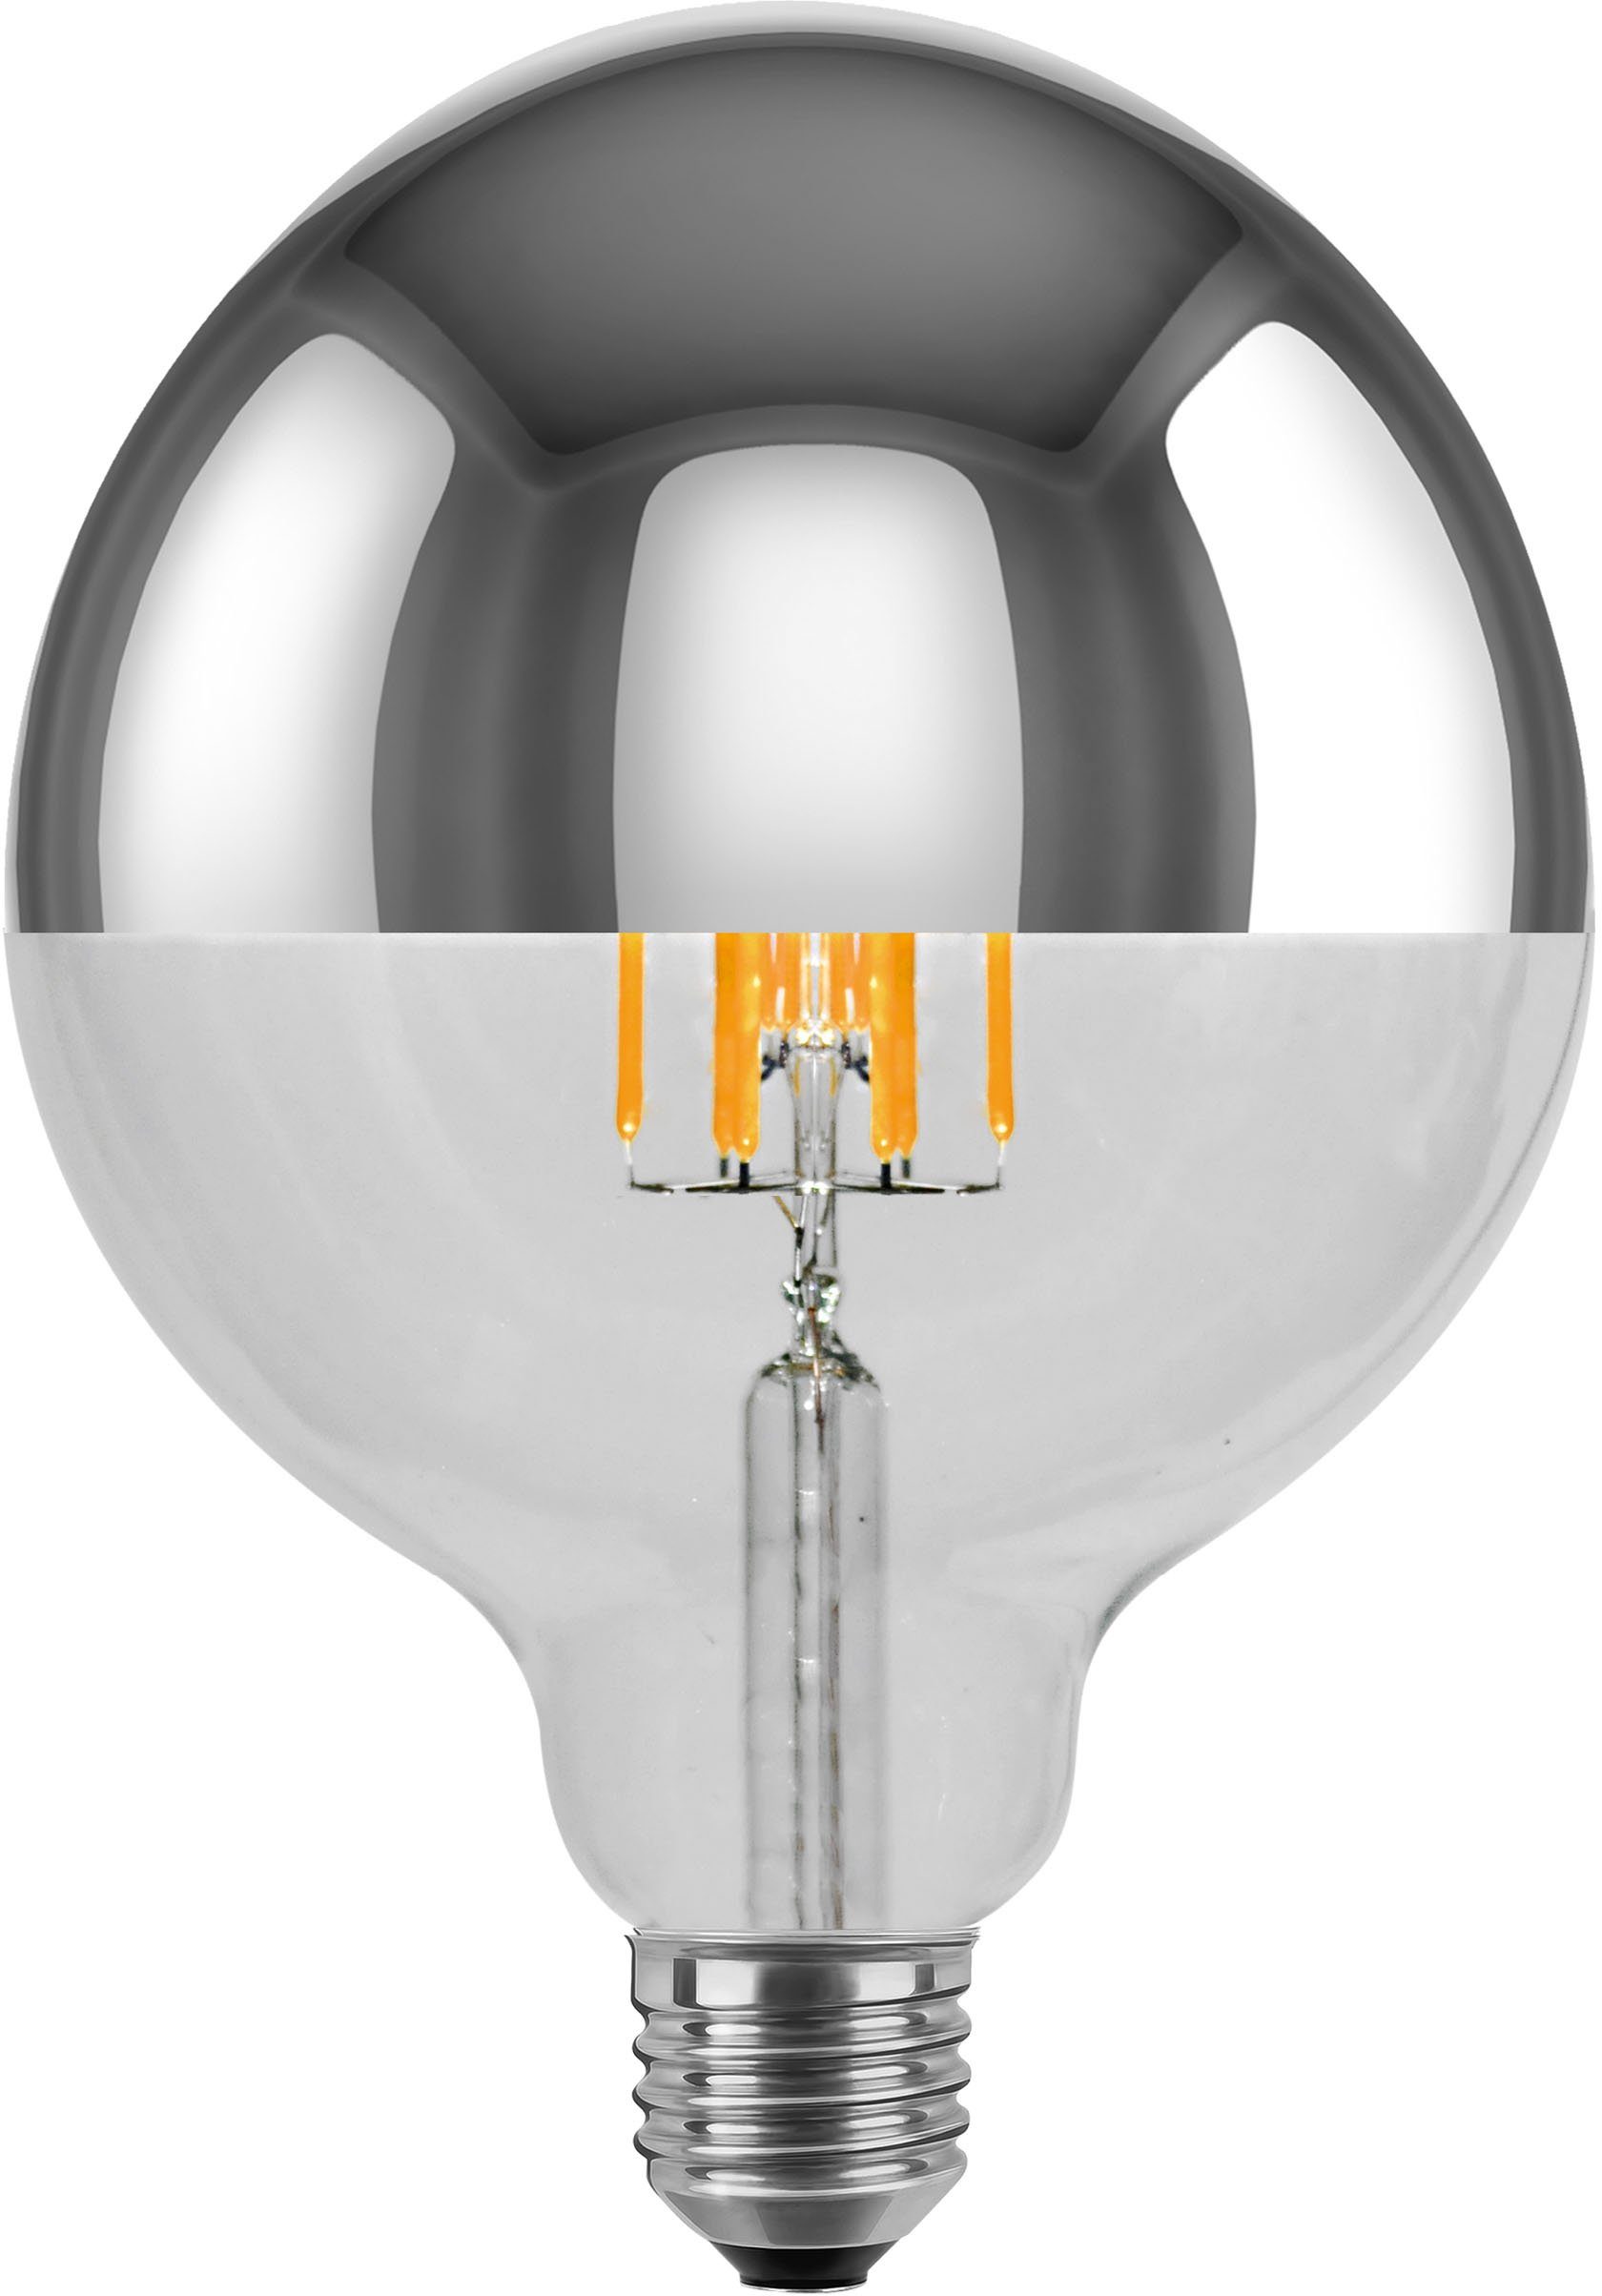 SEGULA LED Globe 125 Spiegelkopf Silber LED-Leuchtmittel, E27, Warmweiß,  dimmbar, E27, Globe 125 Spiegelkopf Silber, 2700K